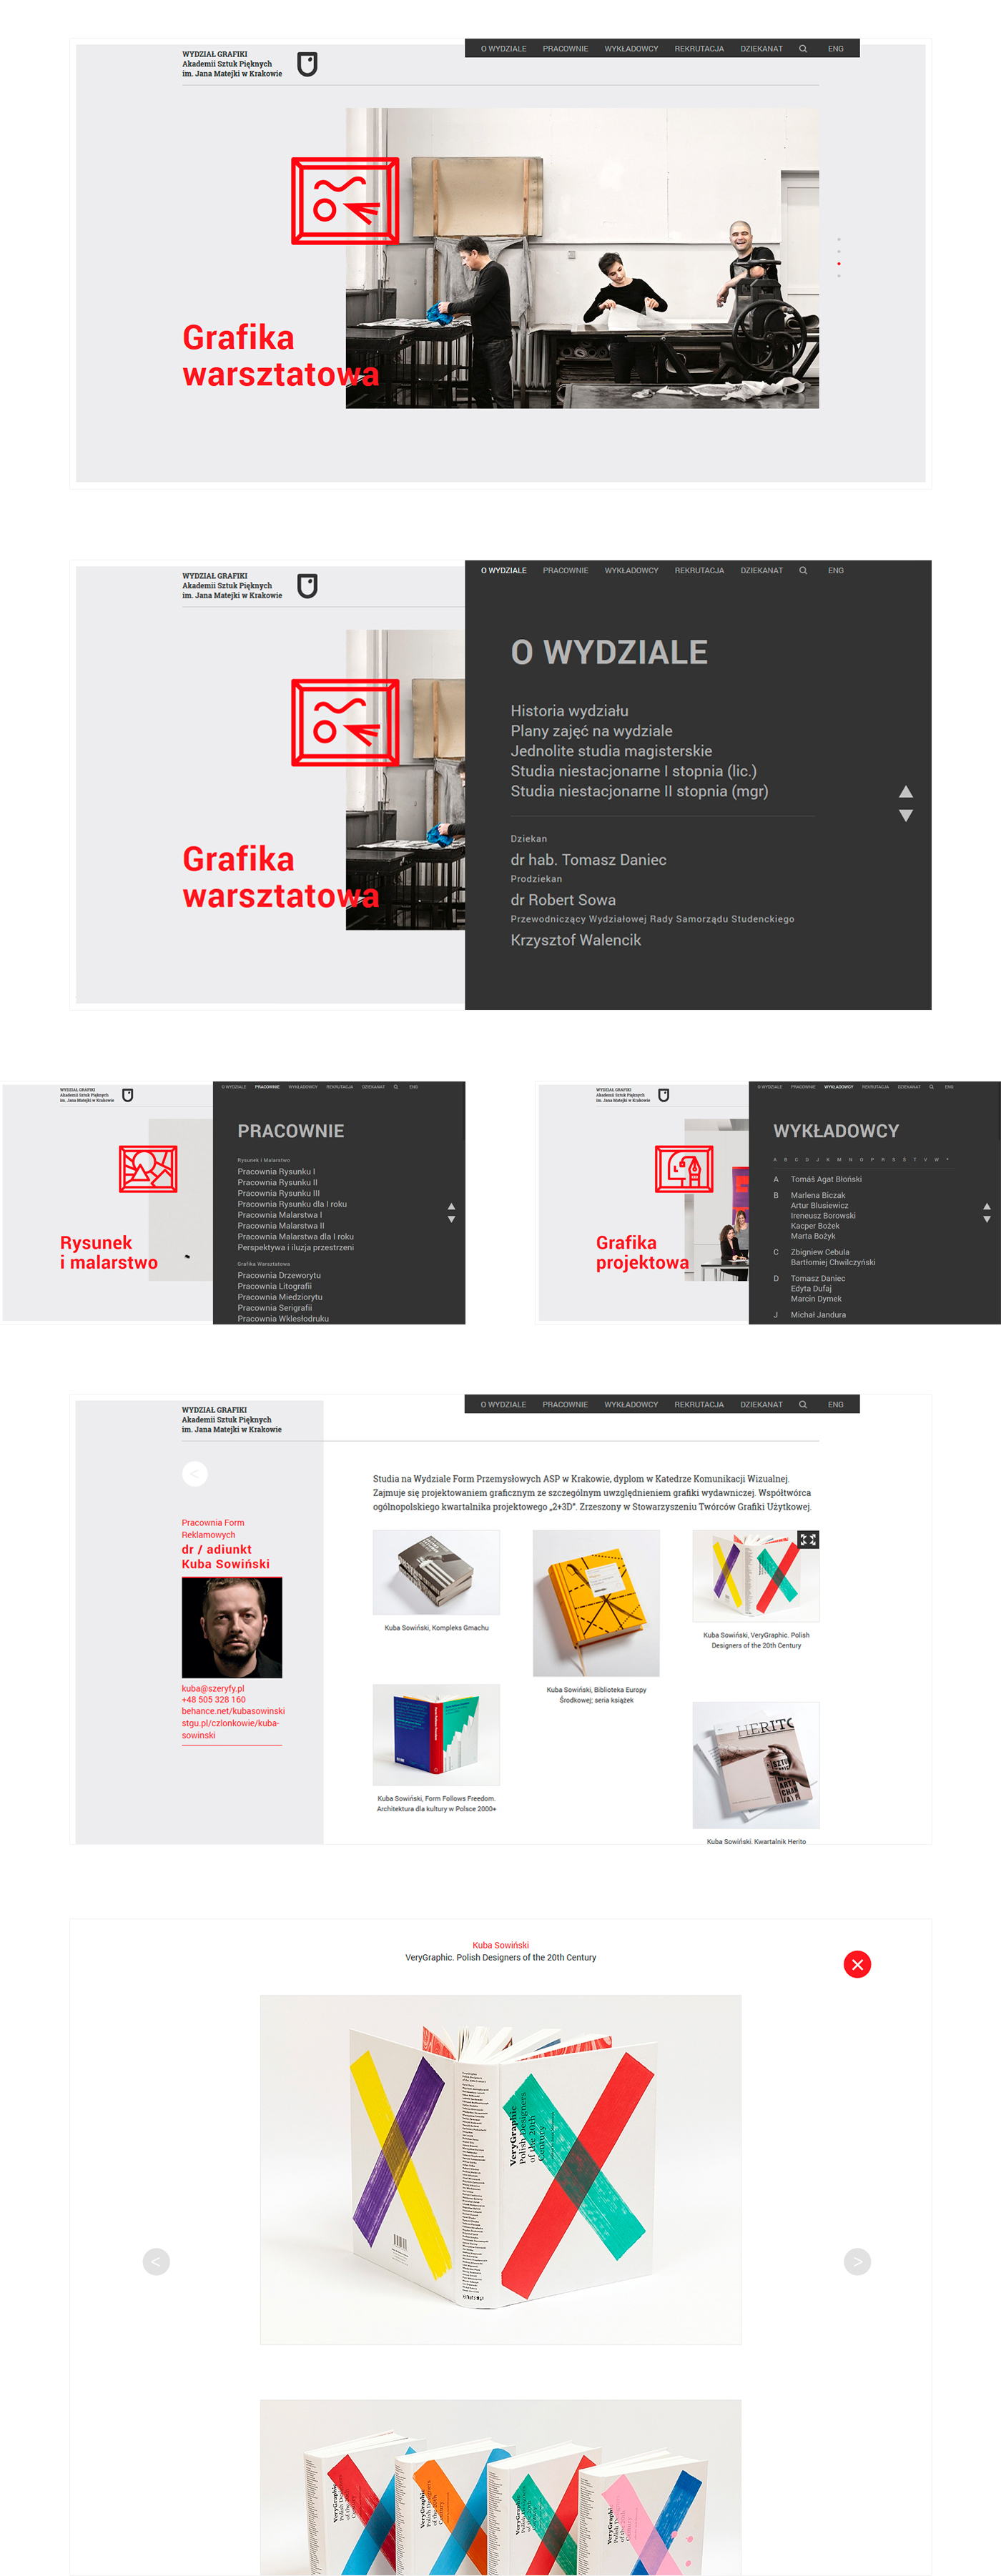 graphic arts art Website design development ux krakow showcase projects Photography 